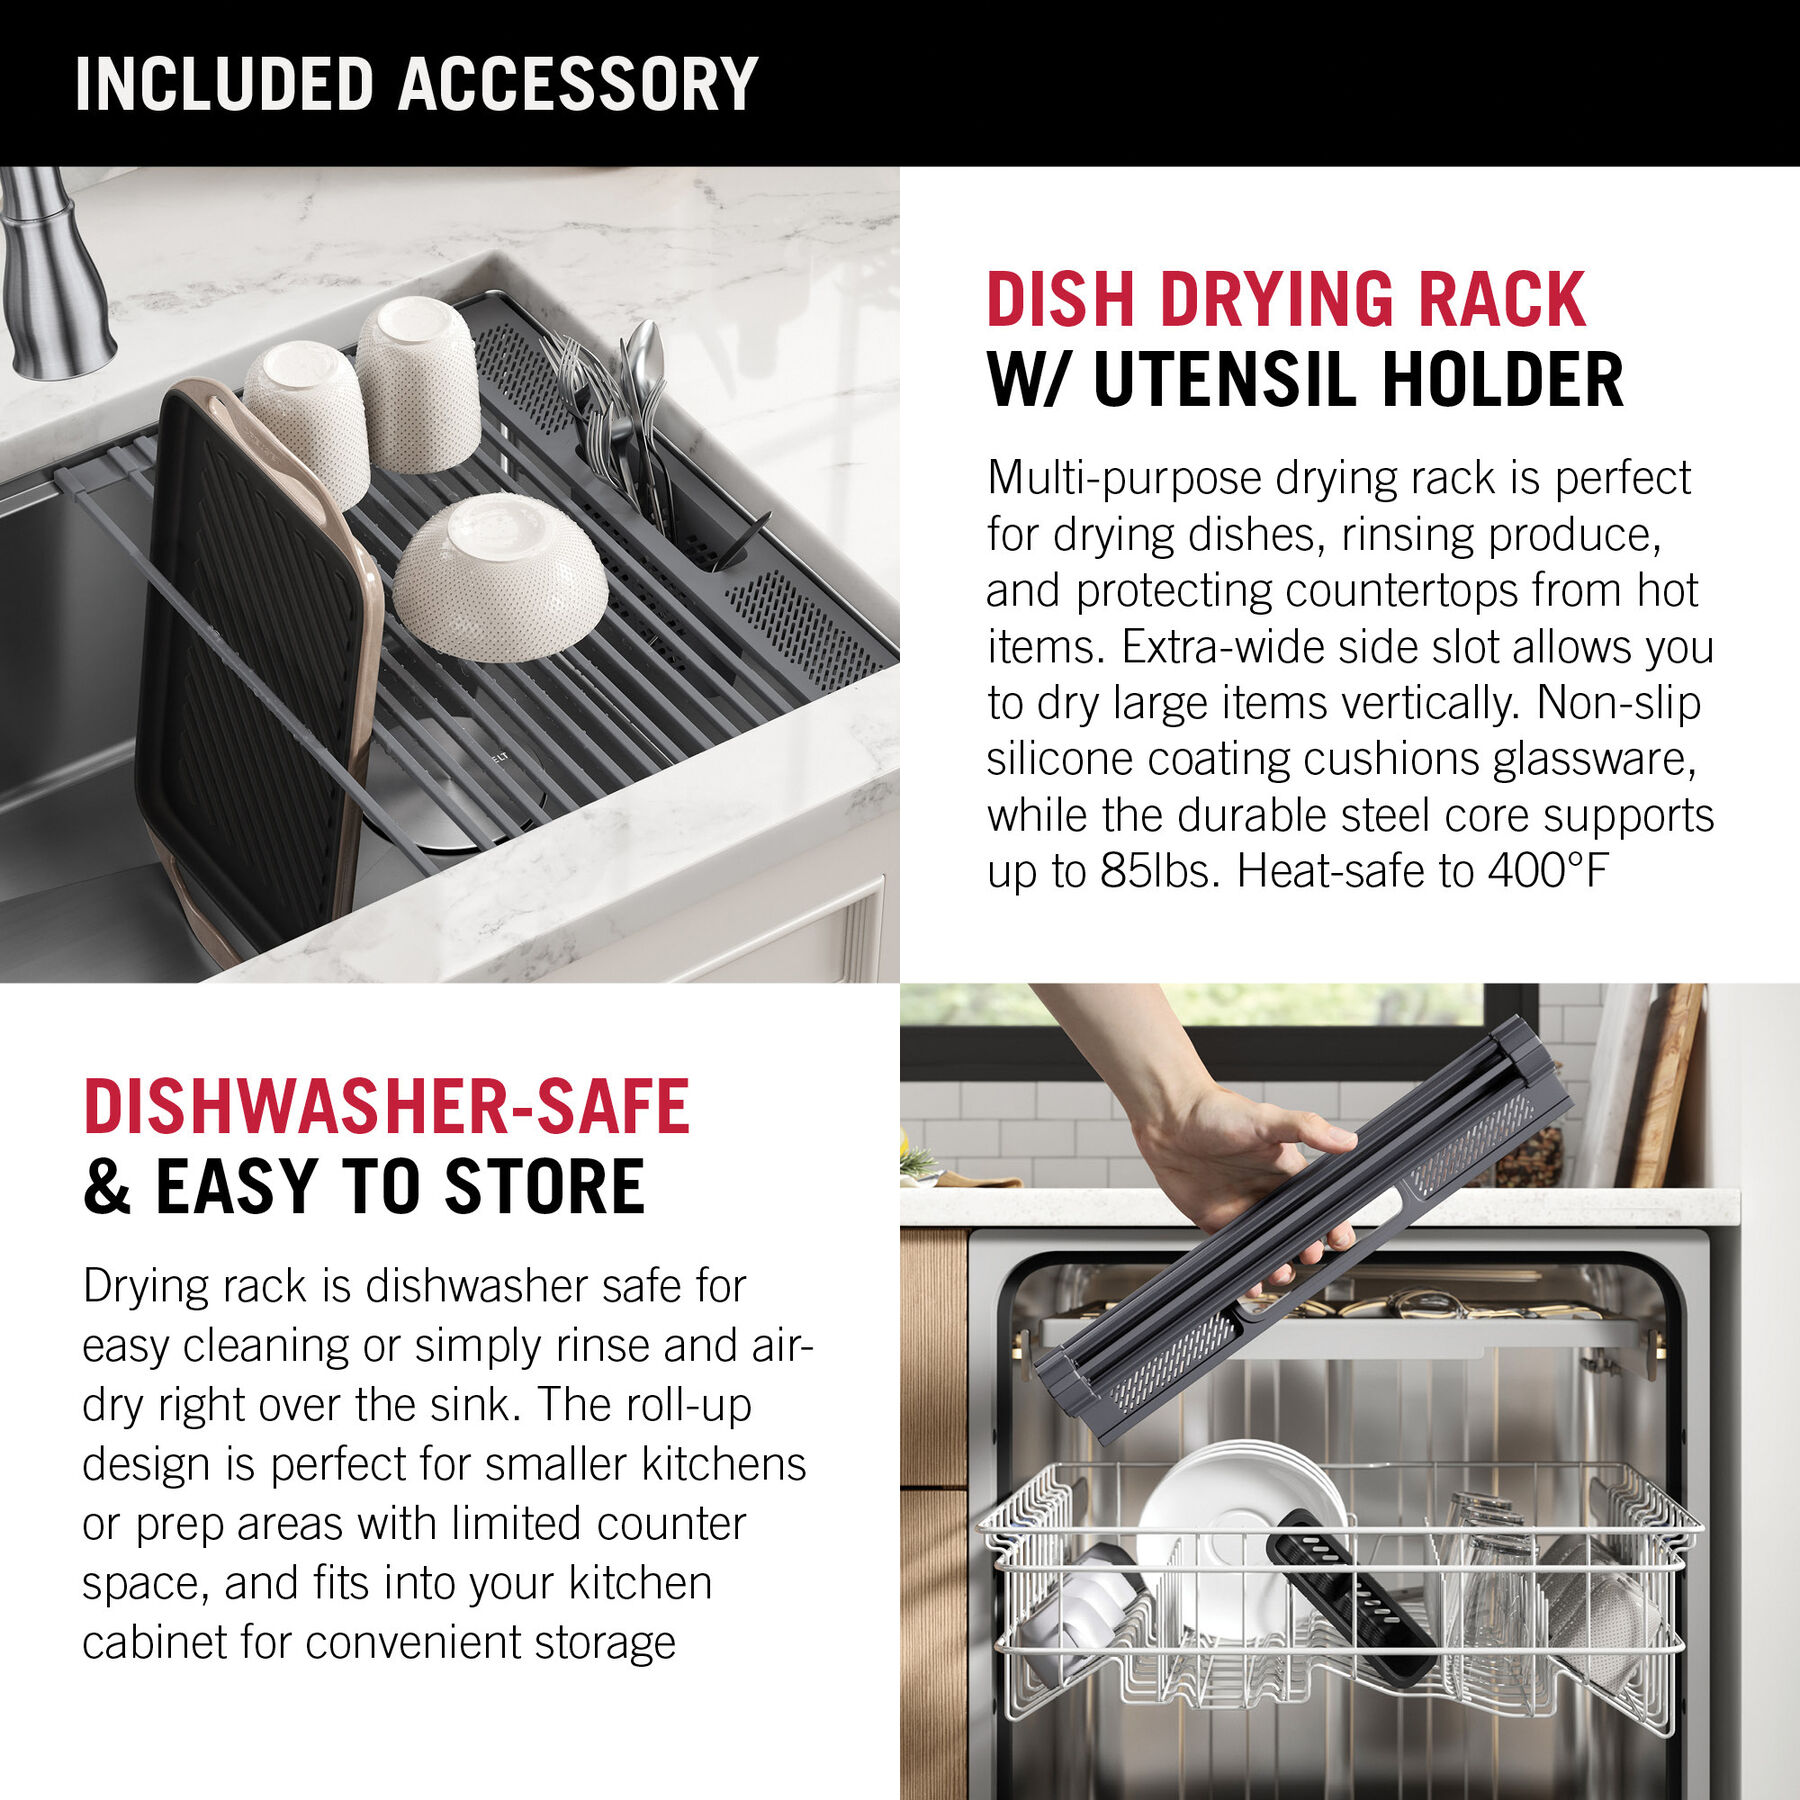 GE Dishwasher Bracket for Corrugated and Granite Countertops